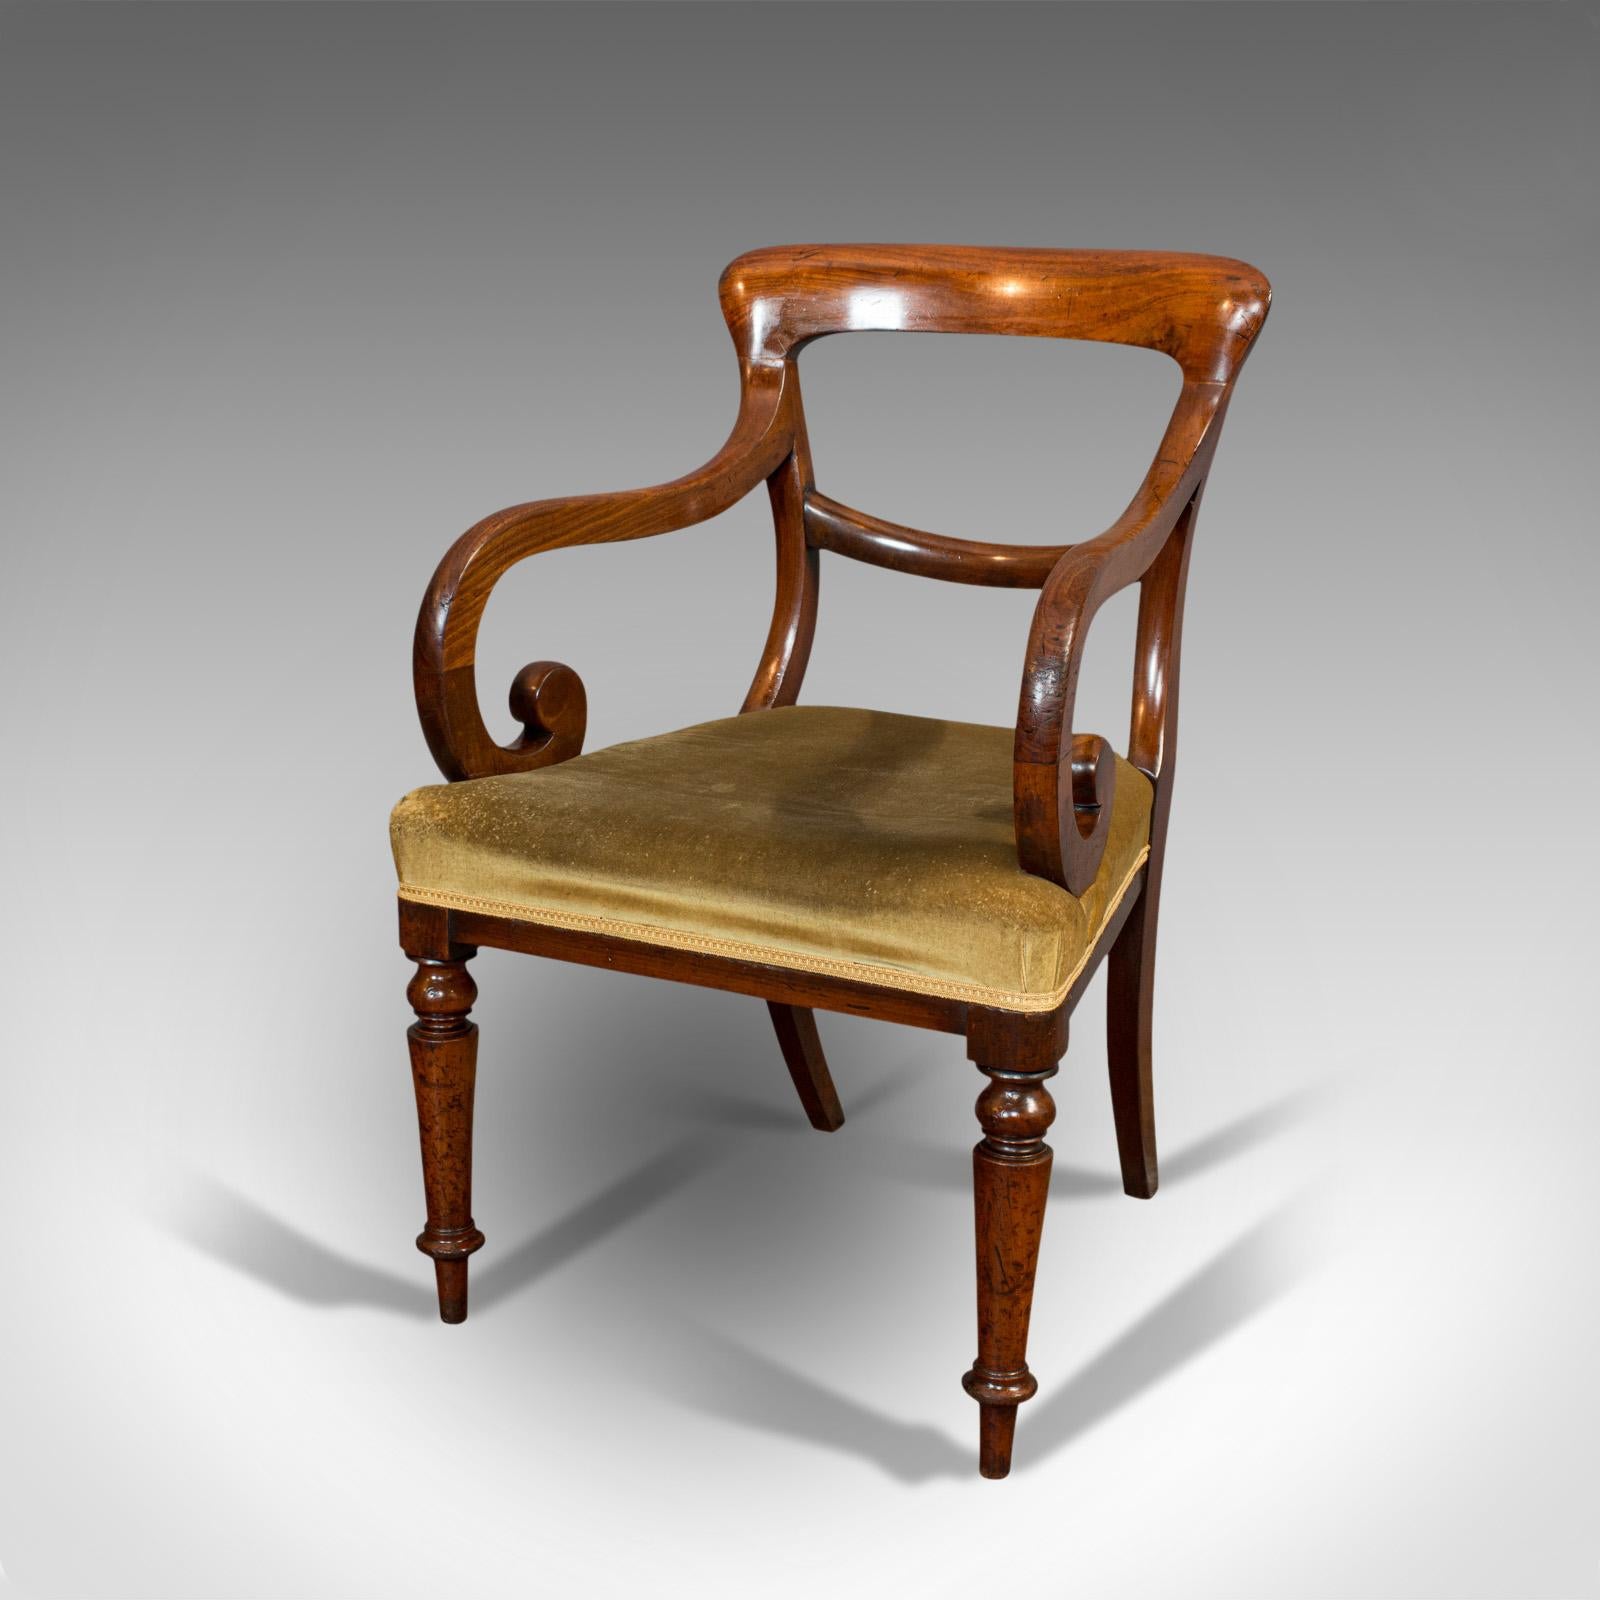 British Antique Serpentine Armchair, English, Mahogany, Elbow Seat, Regency, circa 1820